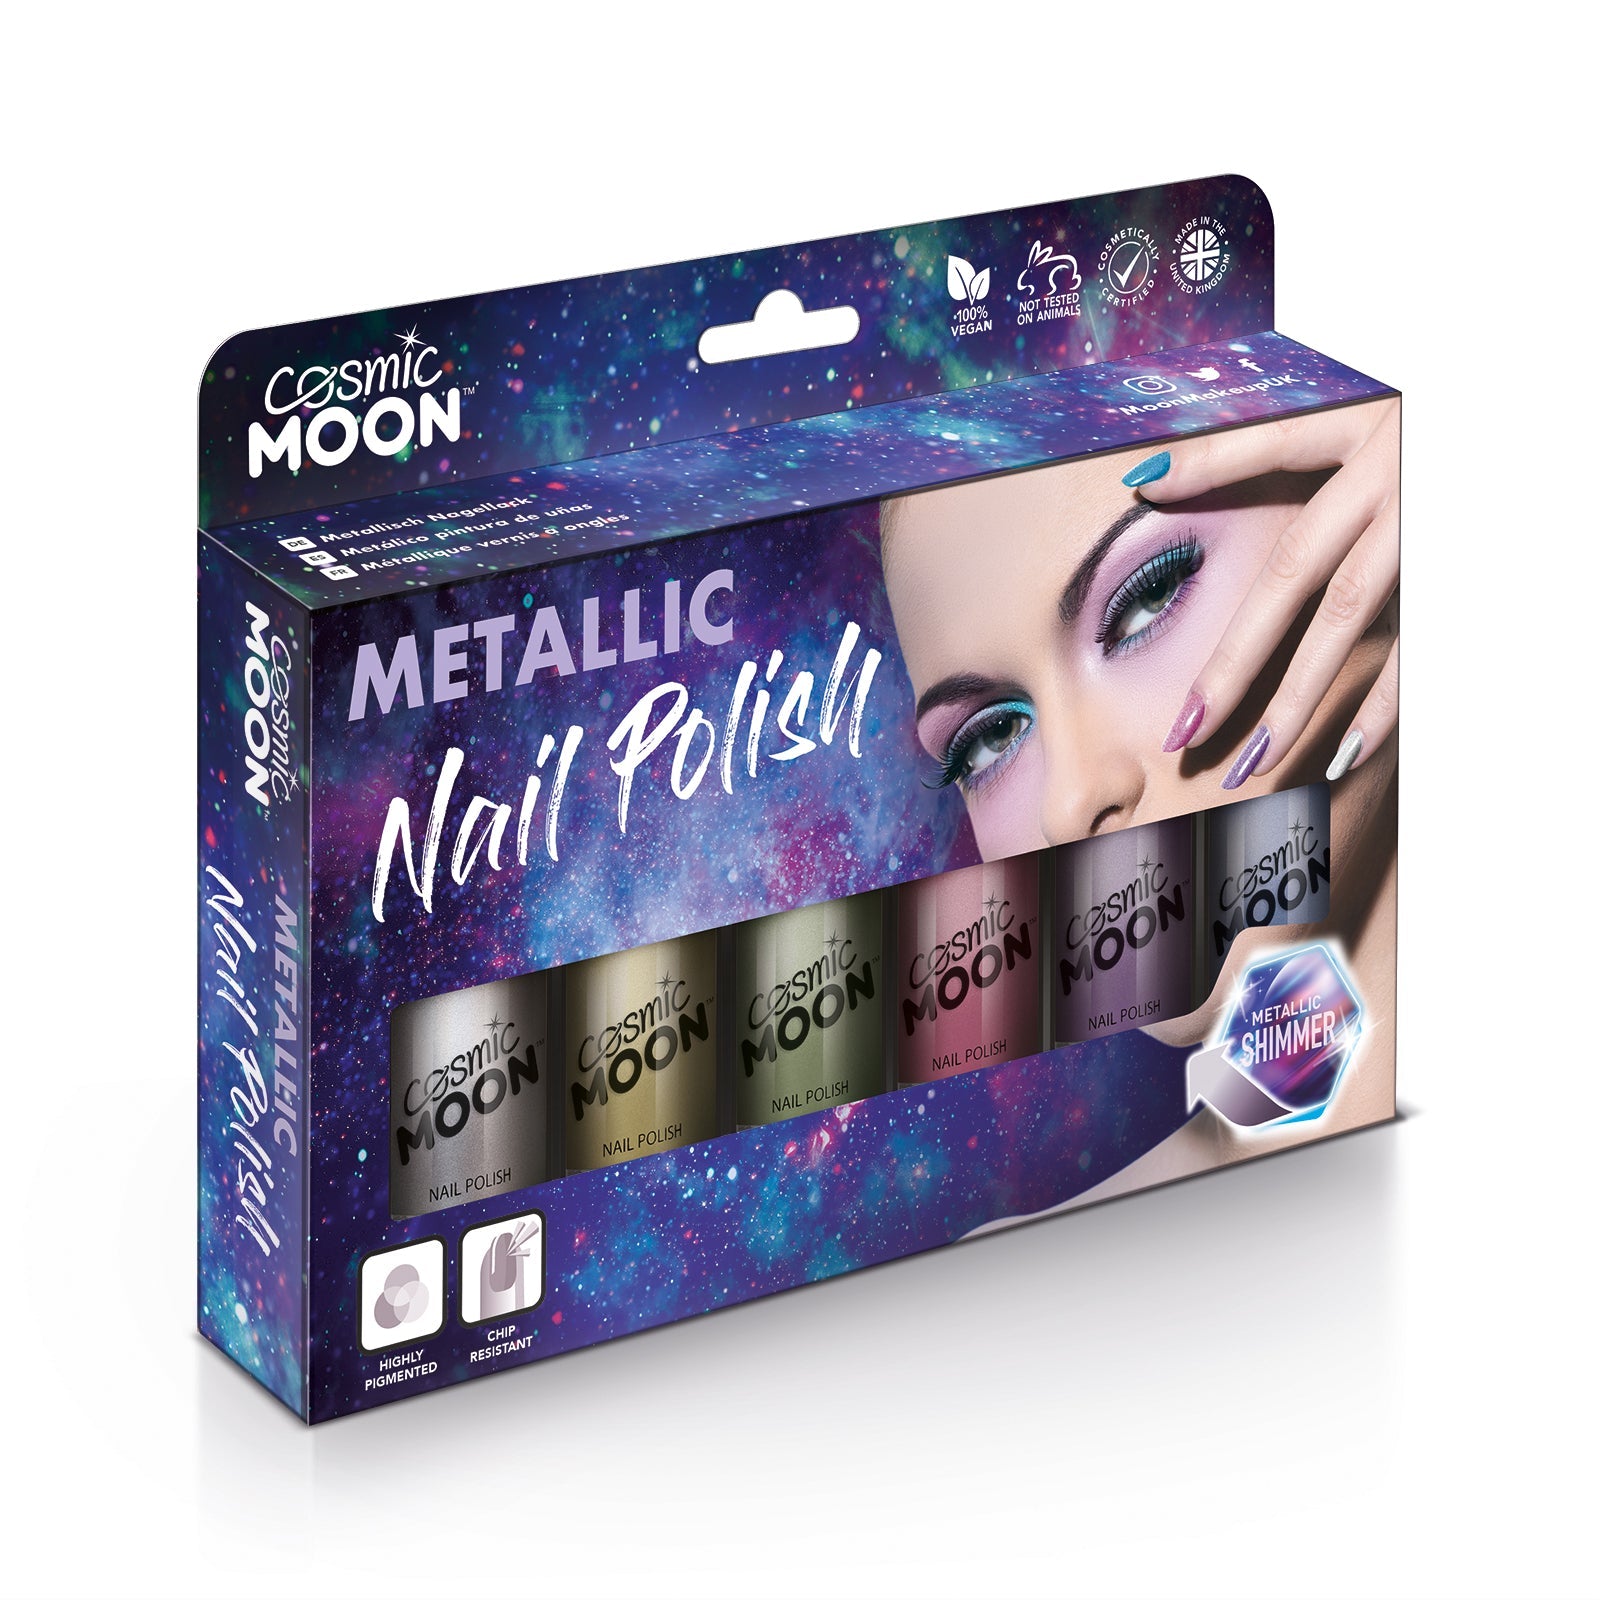 Metallic Nail Polish Boxset - 6 nail polish bottles. Cosmetically certified, FDA & Health Canada compliant, cruelty free and vegan.